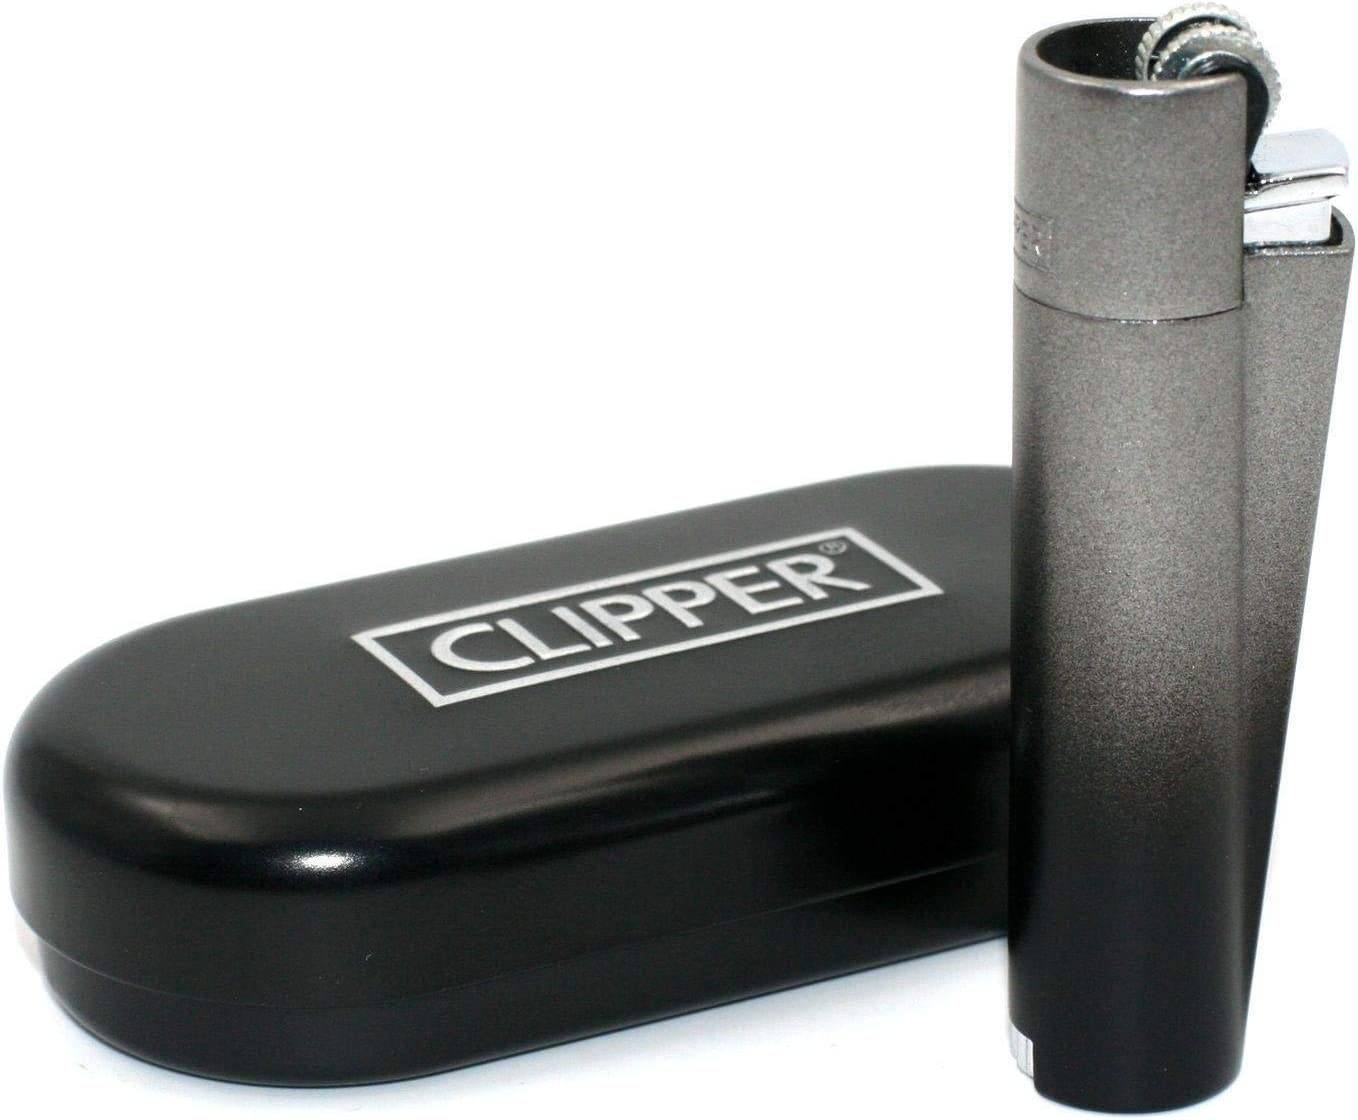 Clipper metal lighter